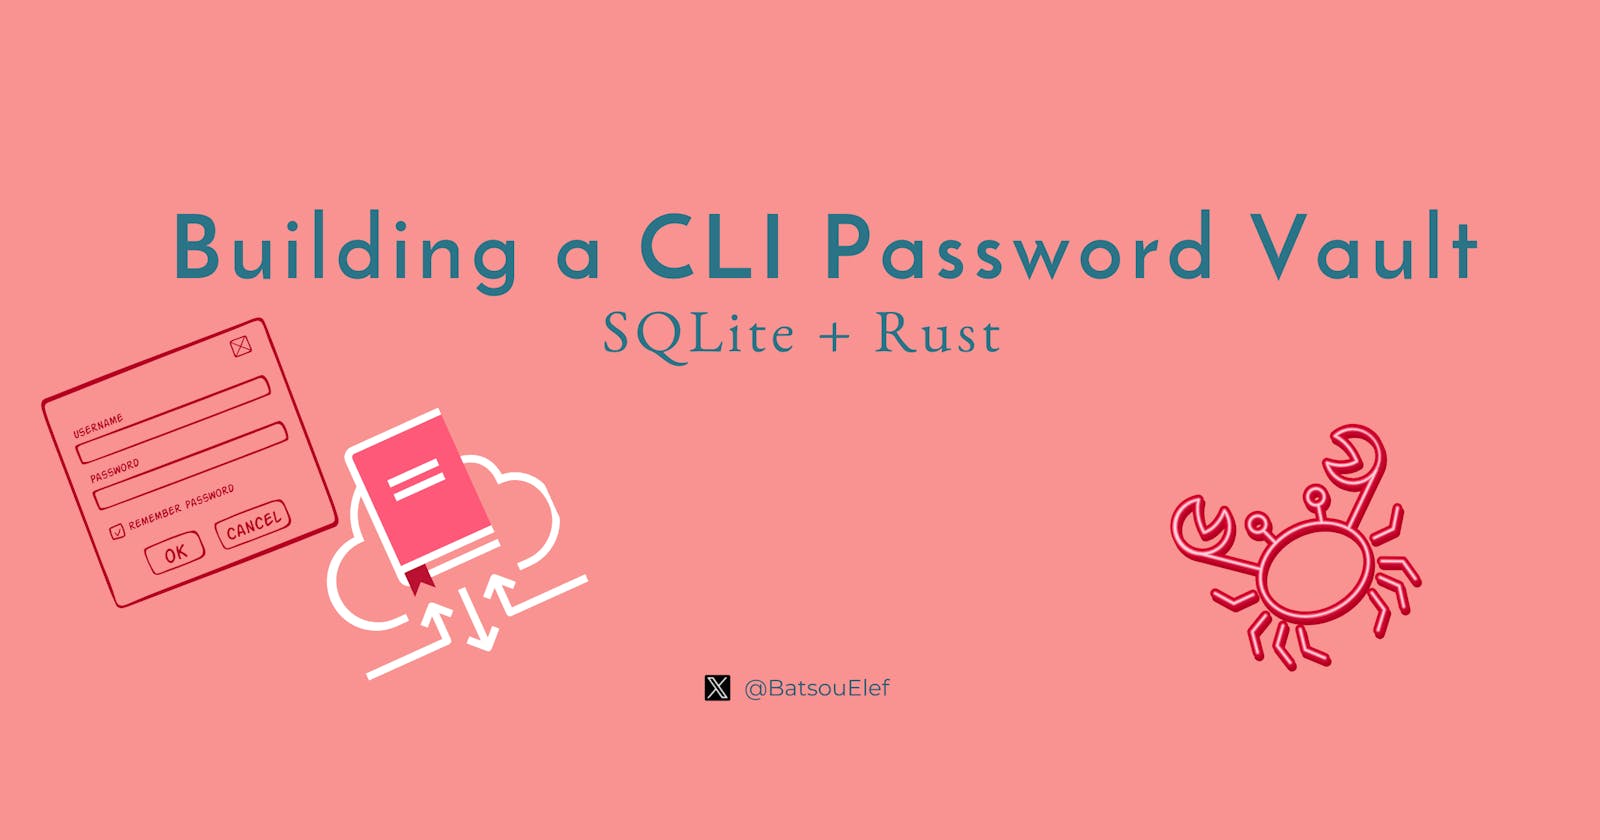 SQLite + Rust: Building a CLI Password Vault 🦀